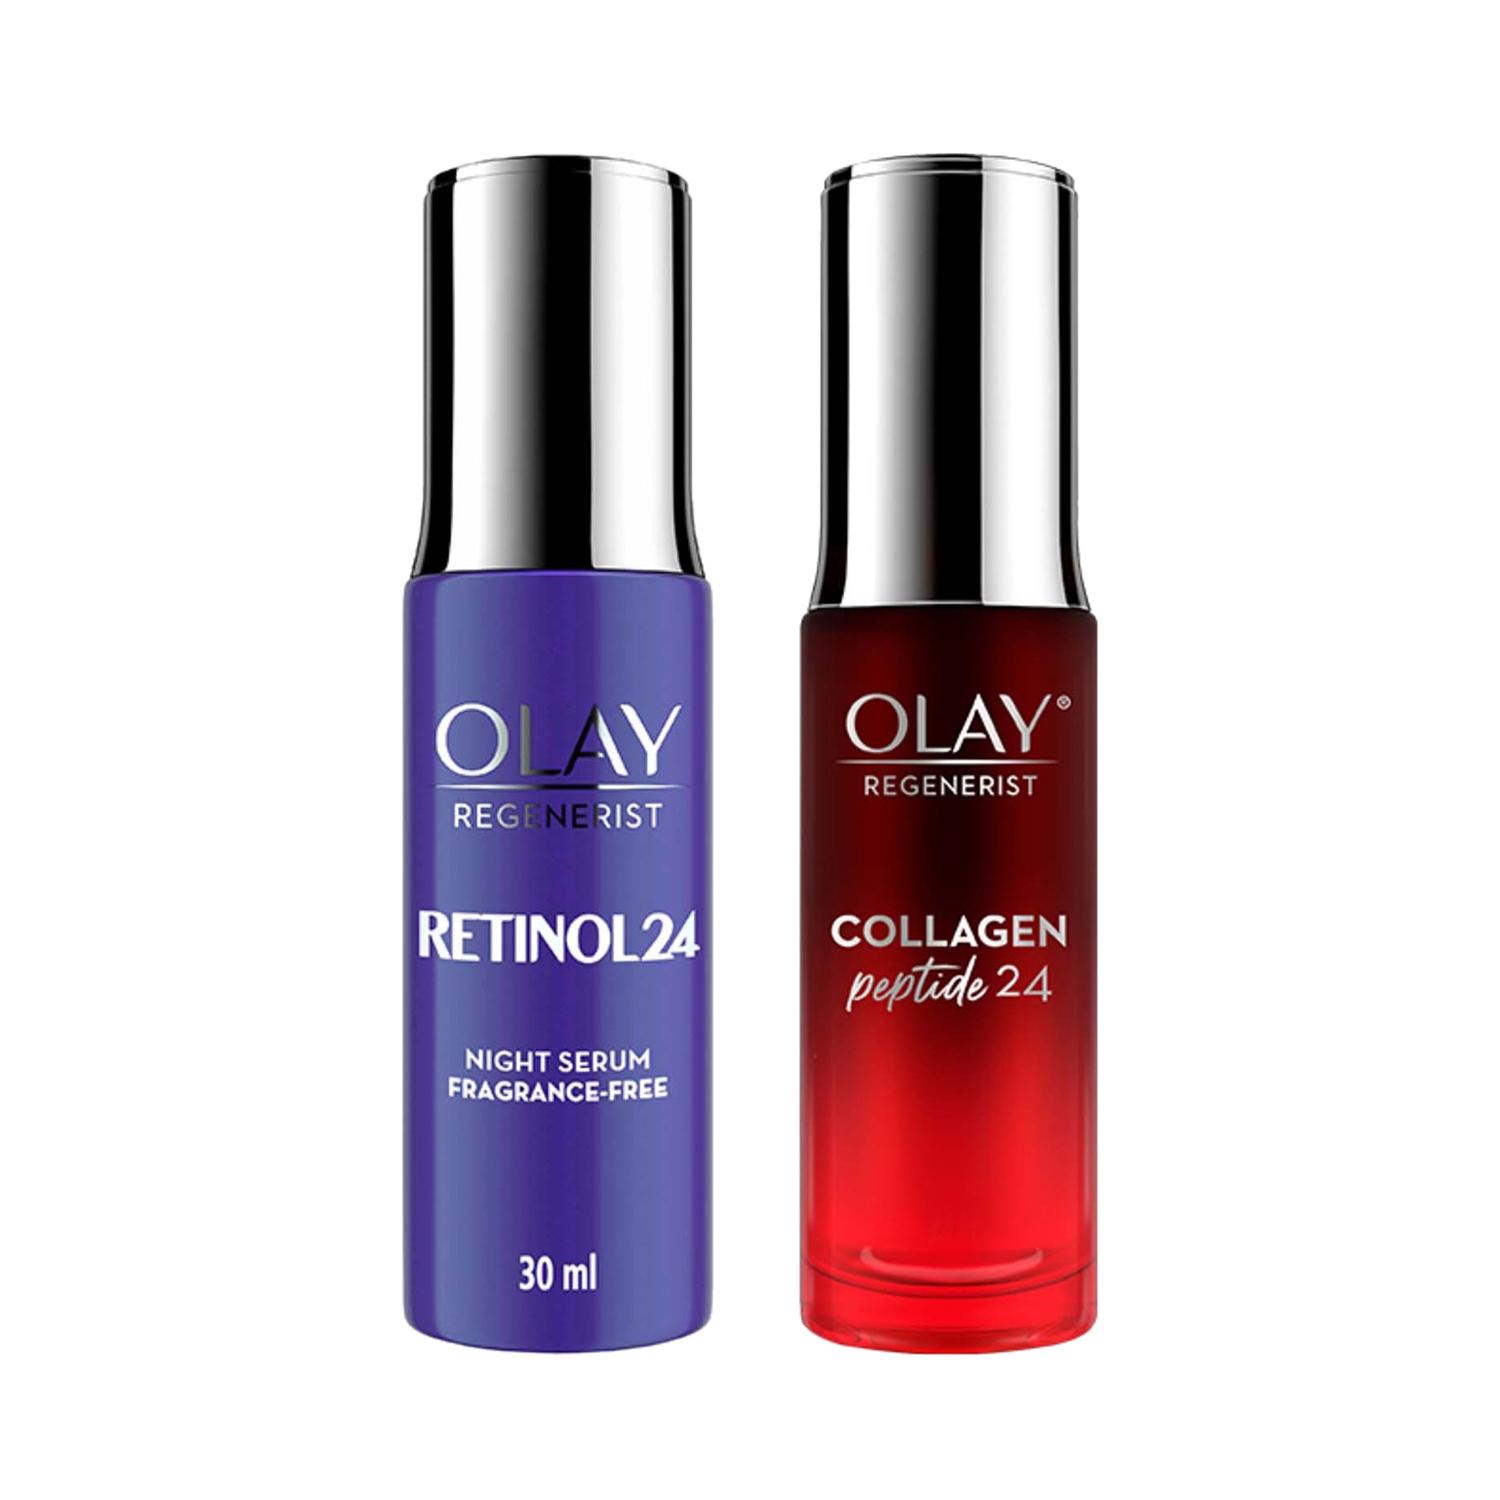 Olay | Olay Retinol Night Serum (30ml) And Olay Regenerist Collagen Peptide 24 Face Serum (30ml) Combo